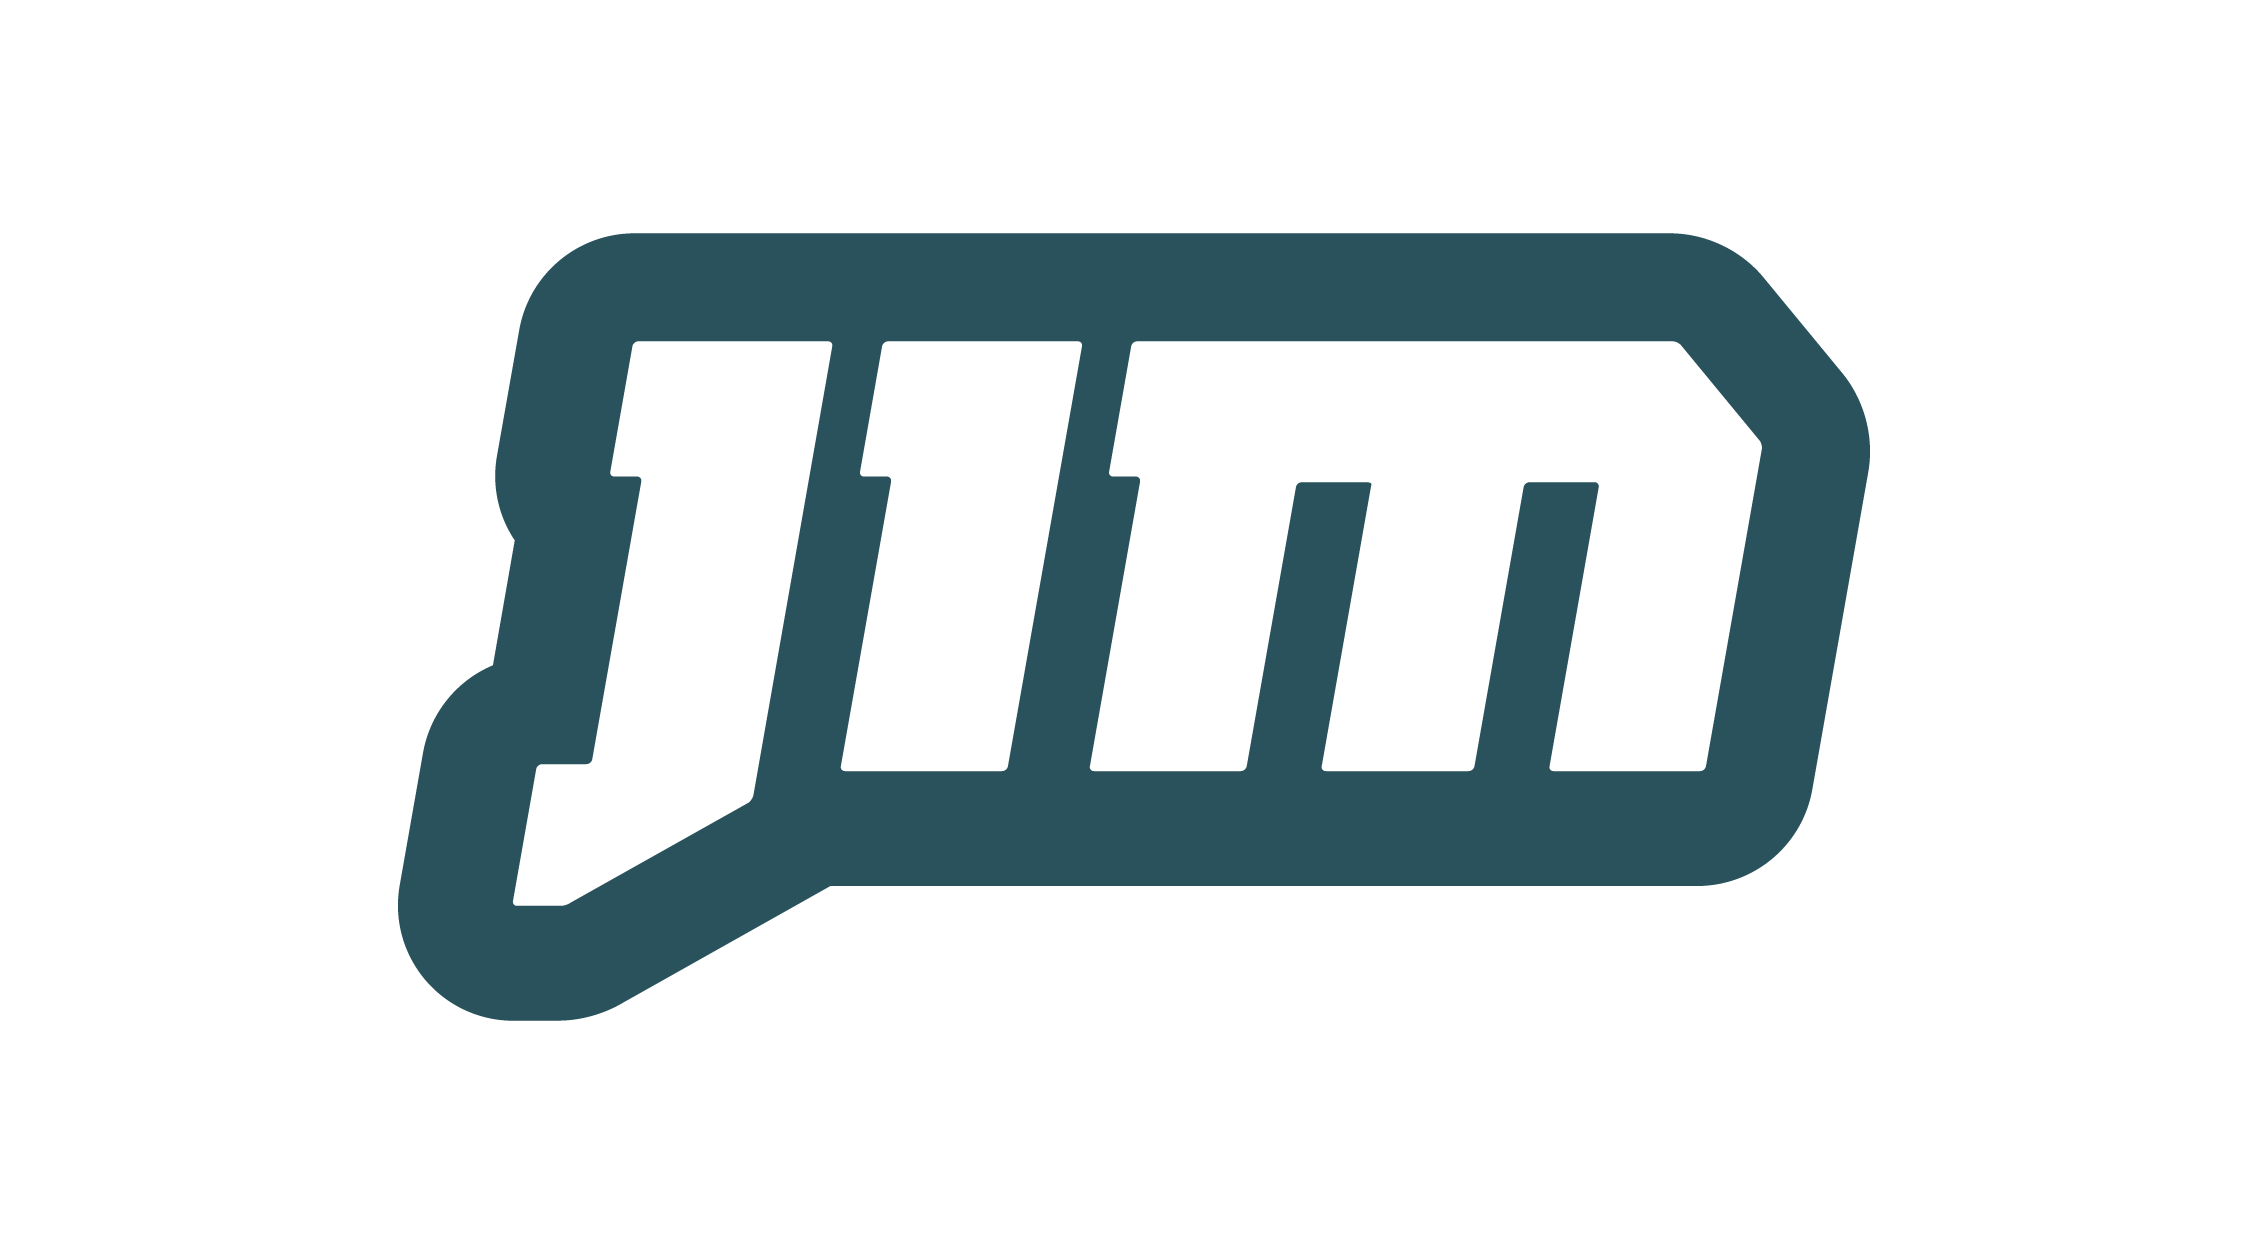 Jim Logo - File:JIM logo-dark green.png - Wikimedia Commons